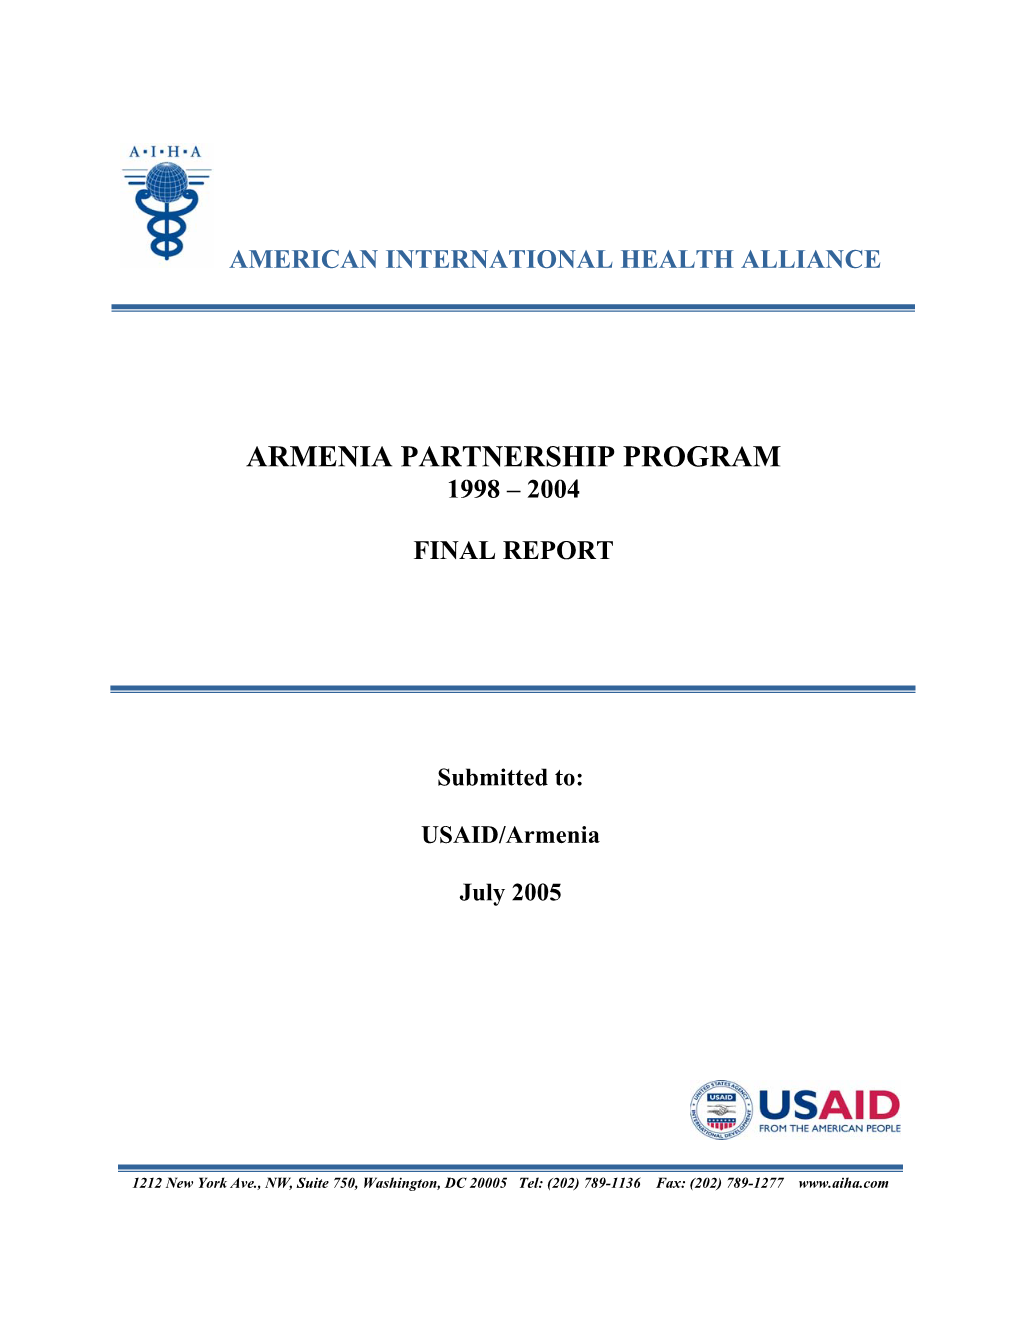 Health Partnerships Program in Armenia: 1998-2004